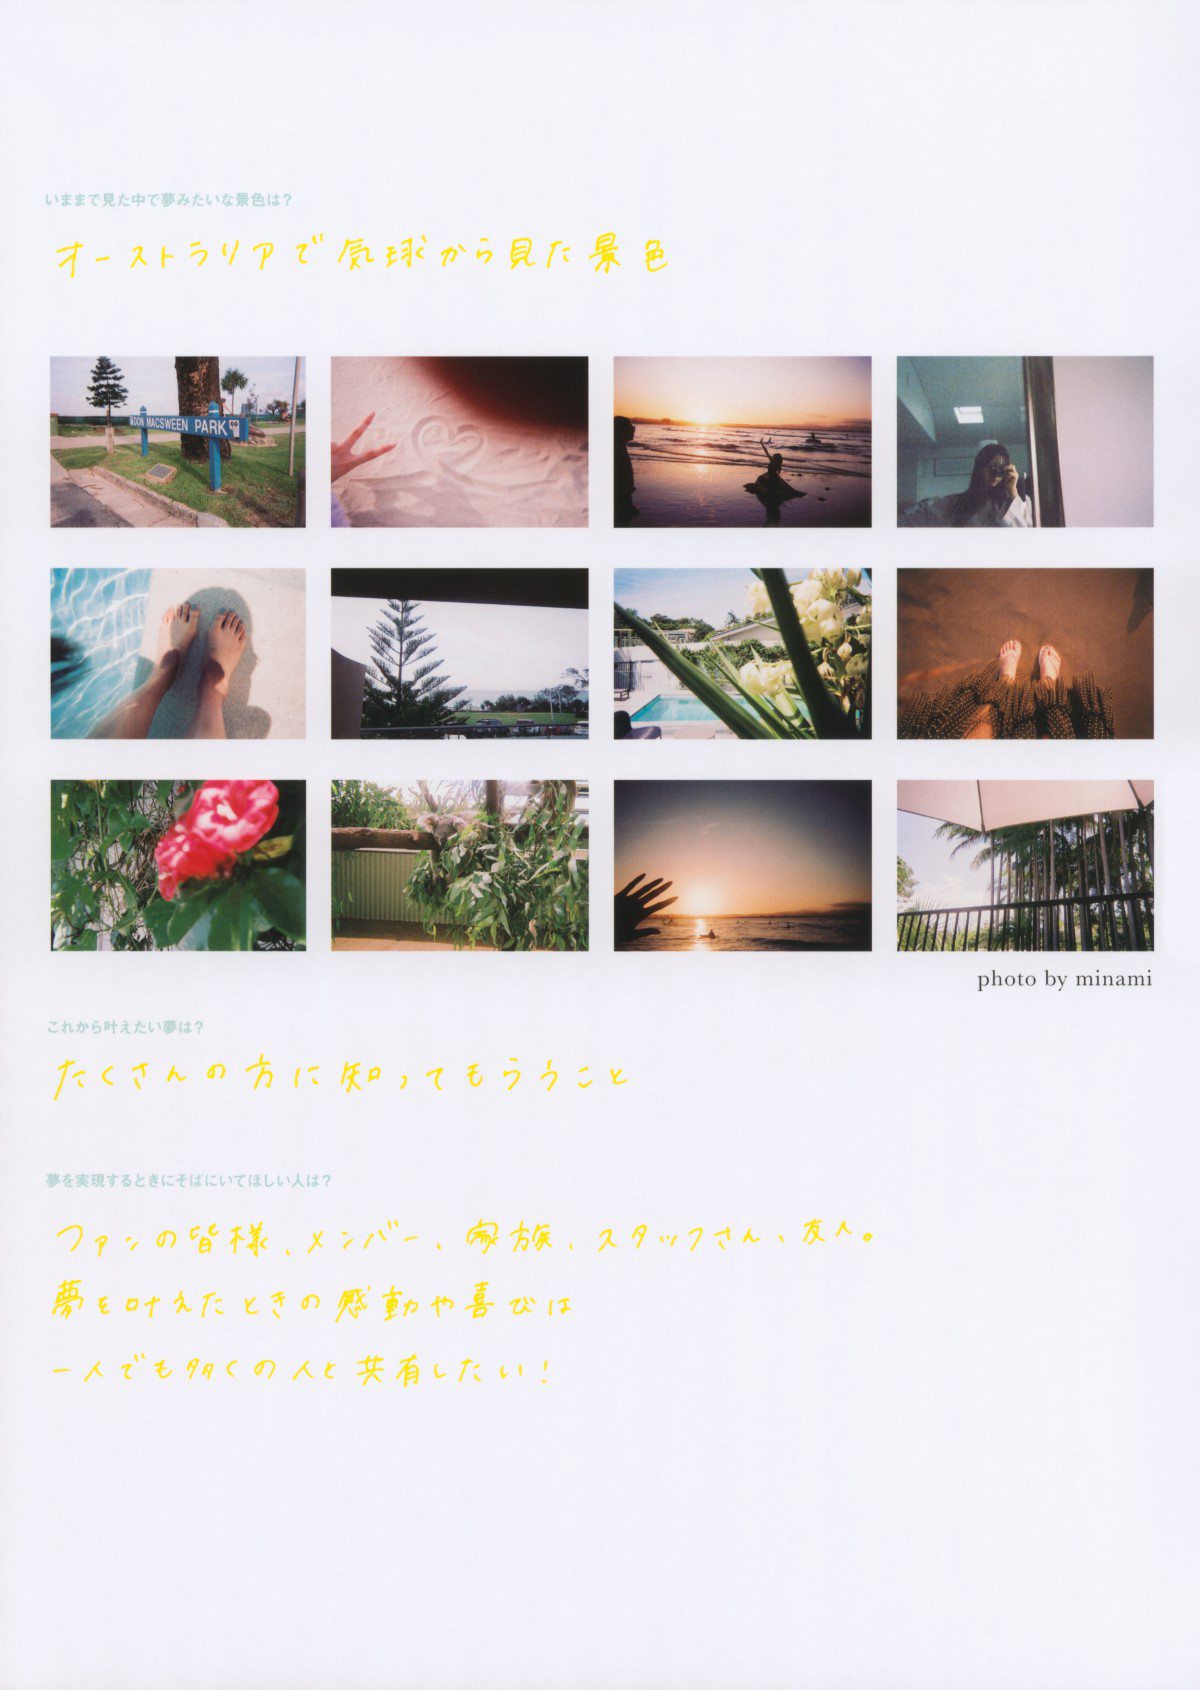 Photobook 2020 09 29 Minami Umezawa 梅澤美波 1st Photobook Near the dream 夢の近く A 0004 Back Cover 8053020754.jpg